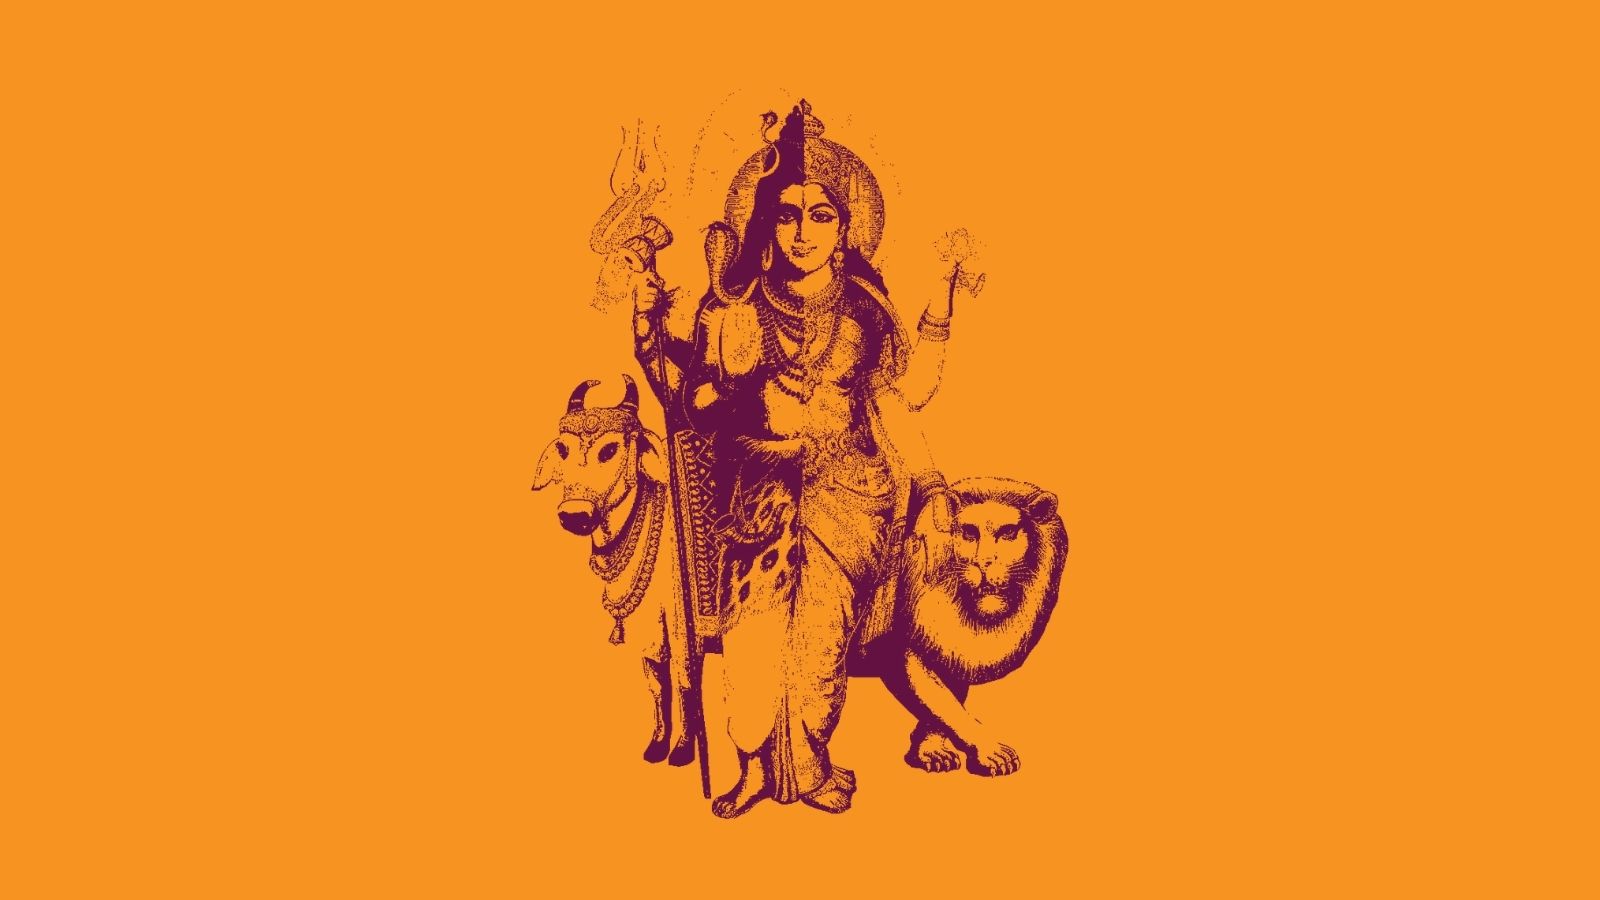 Maha shivratri